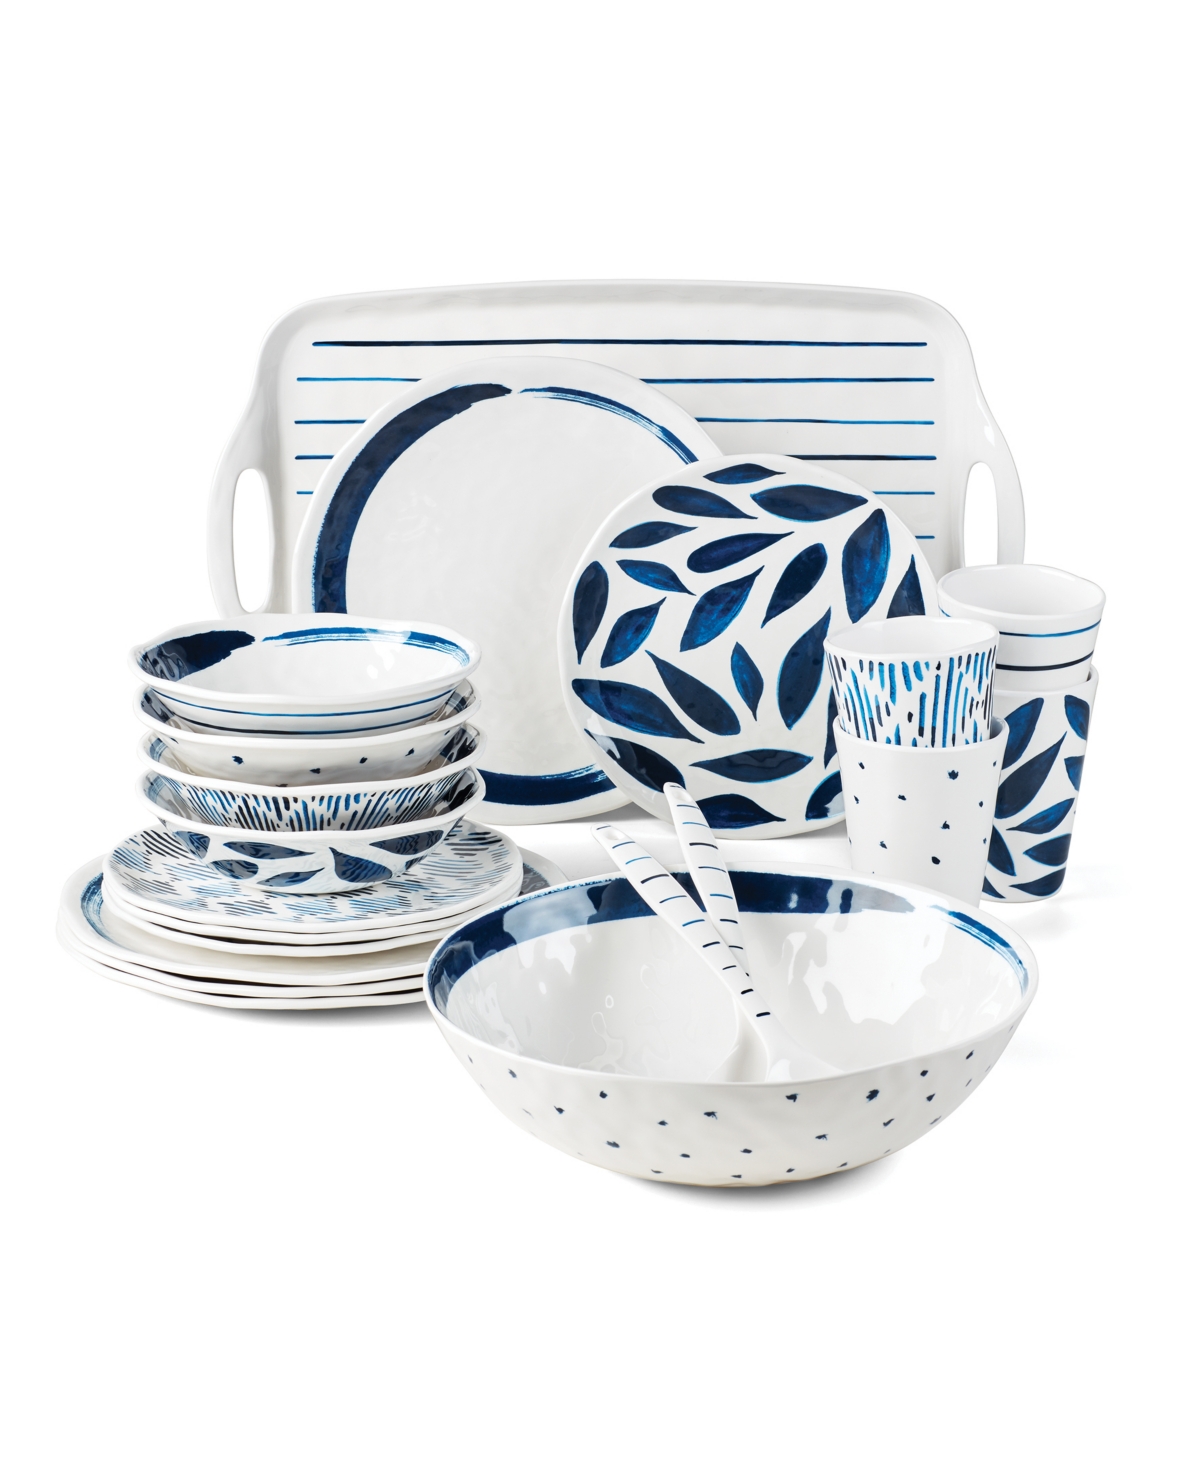 Lenox Blue Bay Melamine 20-piece Dinnerware Set, Service For 4 In White